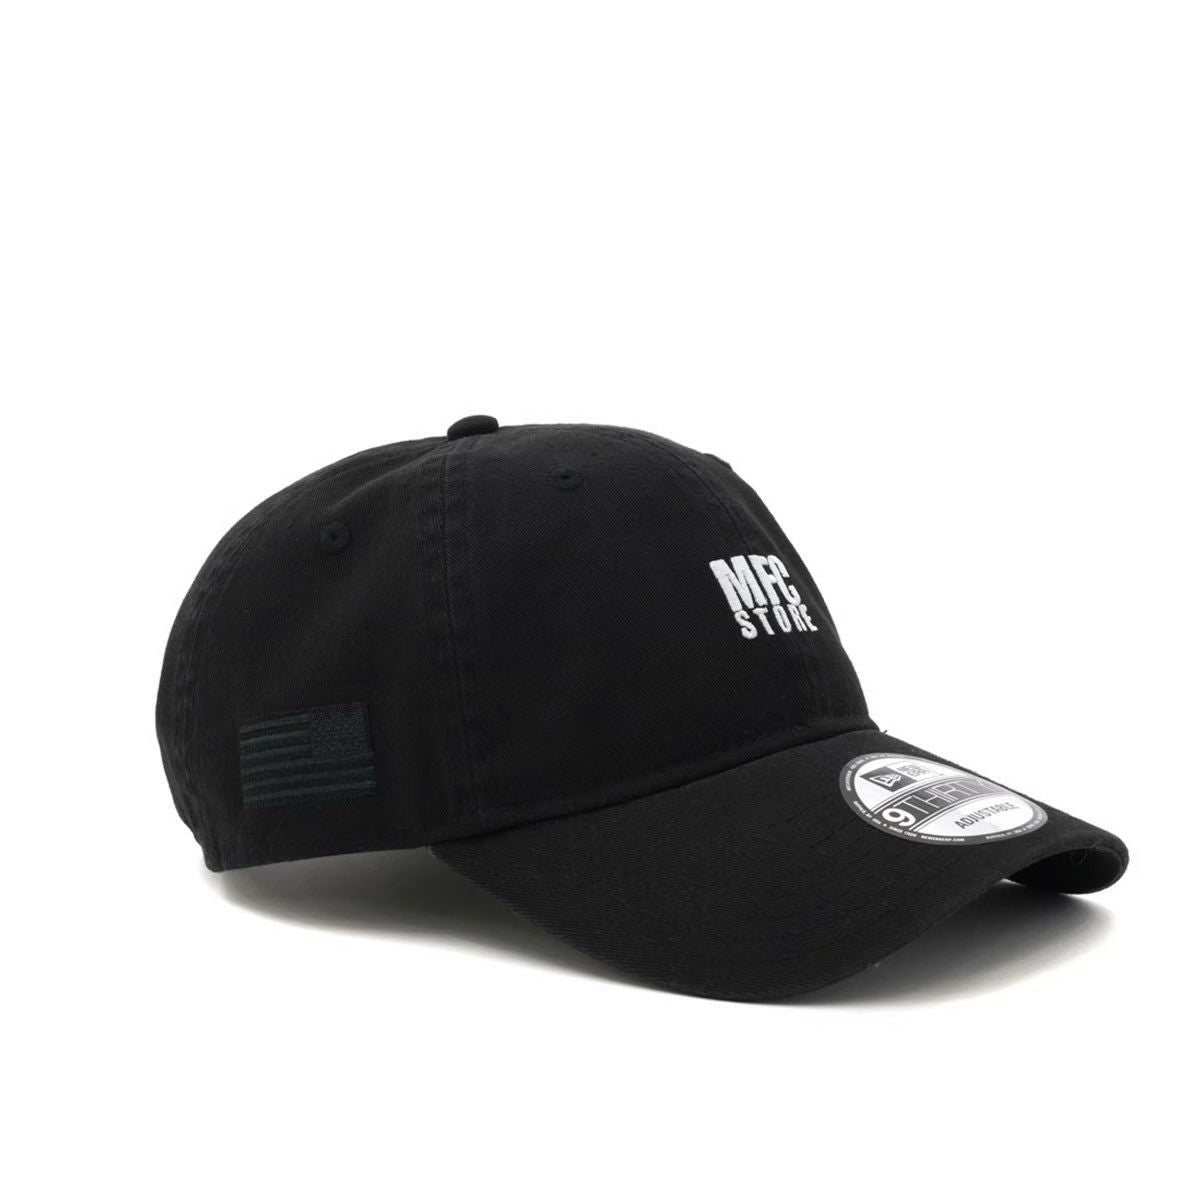 NEW ERA × MFC STORE LOGO 帽 9THIRTY [13284158]